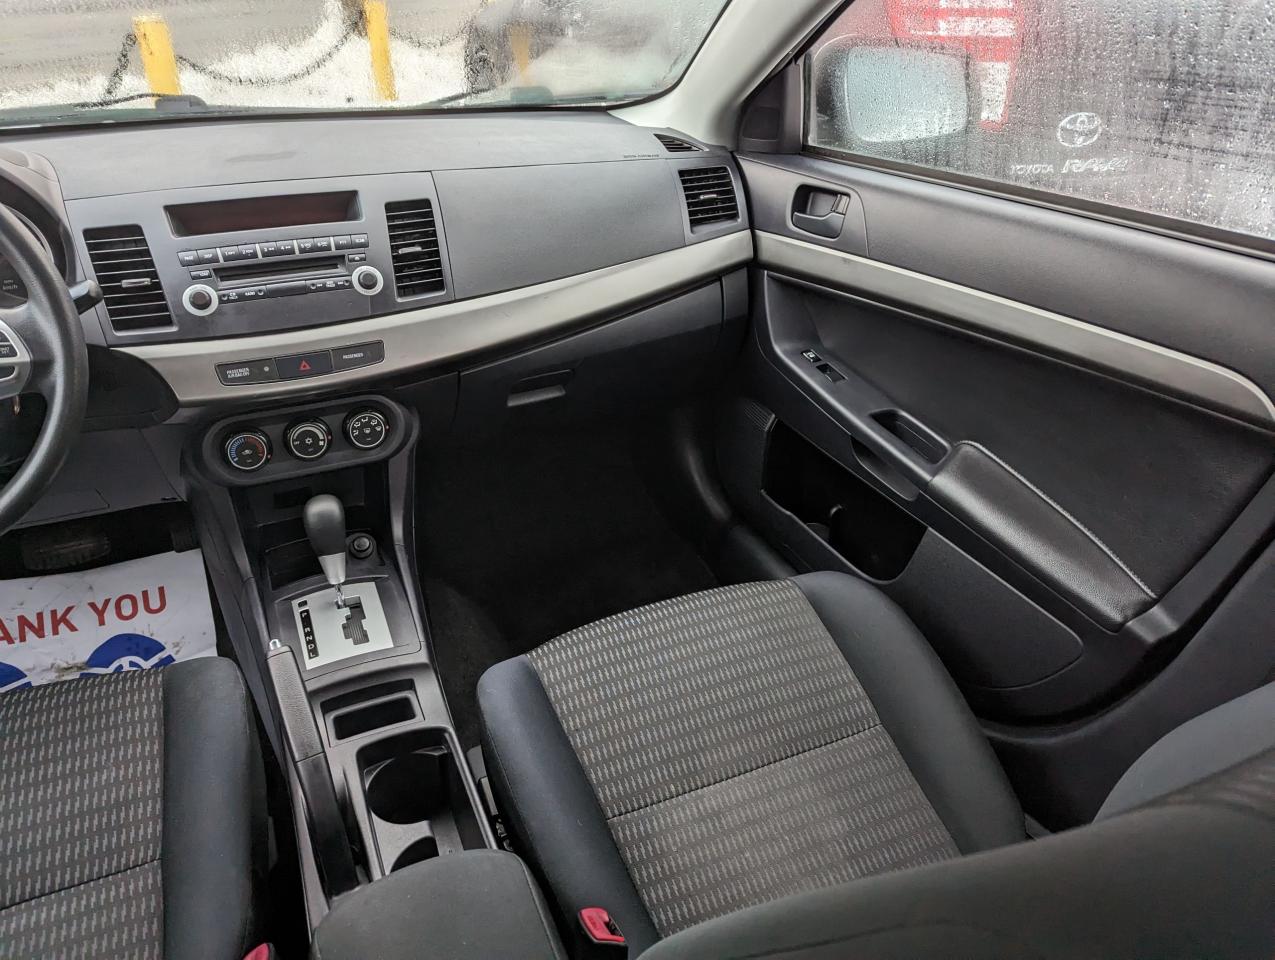 2013 Mitsubishi Lancer *Free 2 Year Lubrico Warranty/Runs & Drives Great/Bluetooth/Low kms* - Photo #29